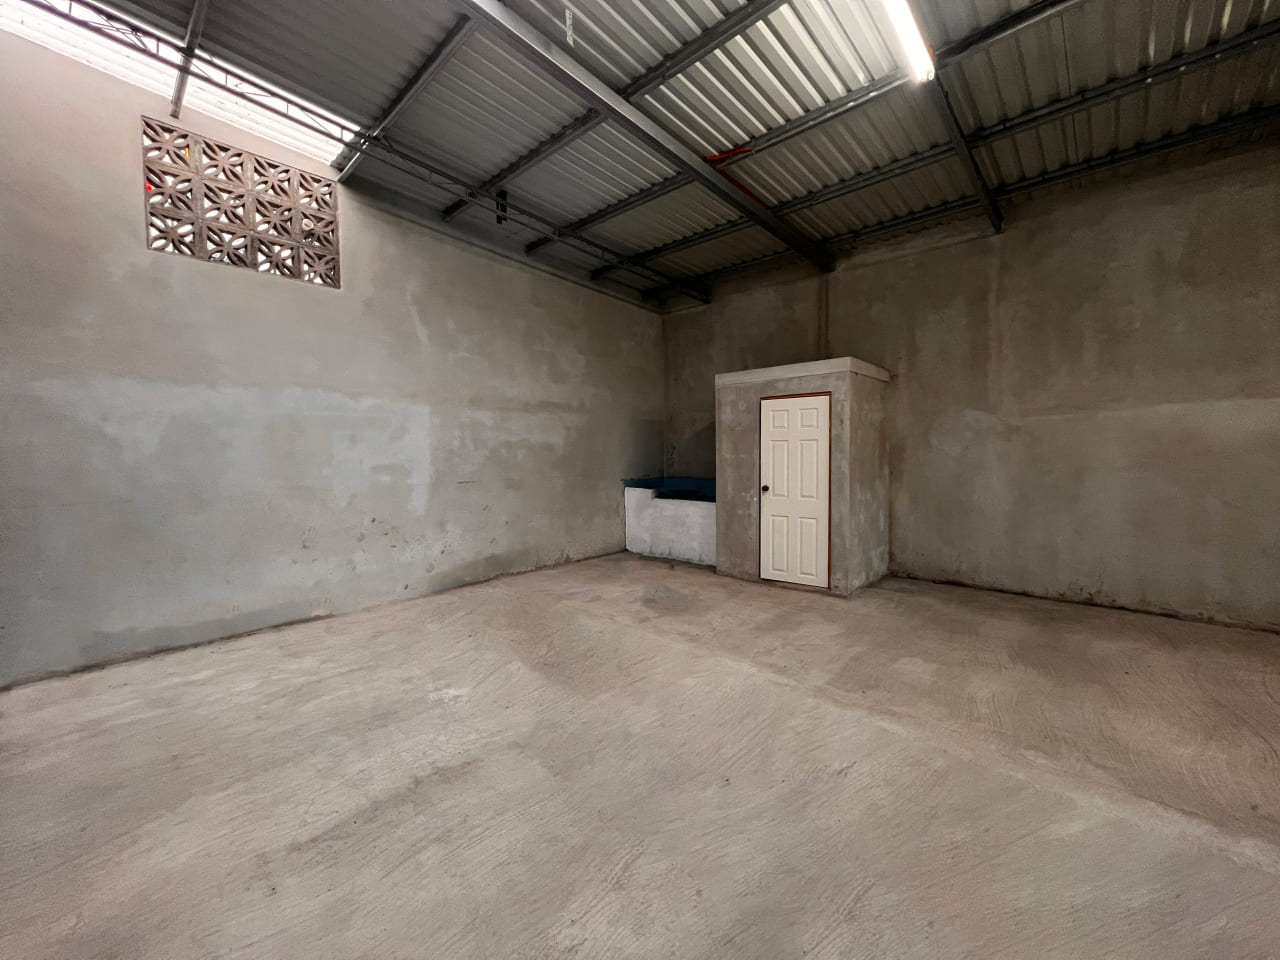 Bodega interior con paredes de bloque, techo de lámina con traga luz, pila para almacenar agua y baño privado al fondo.